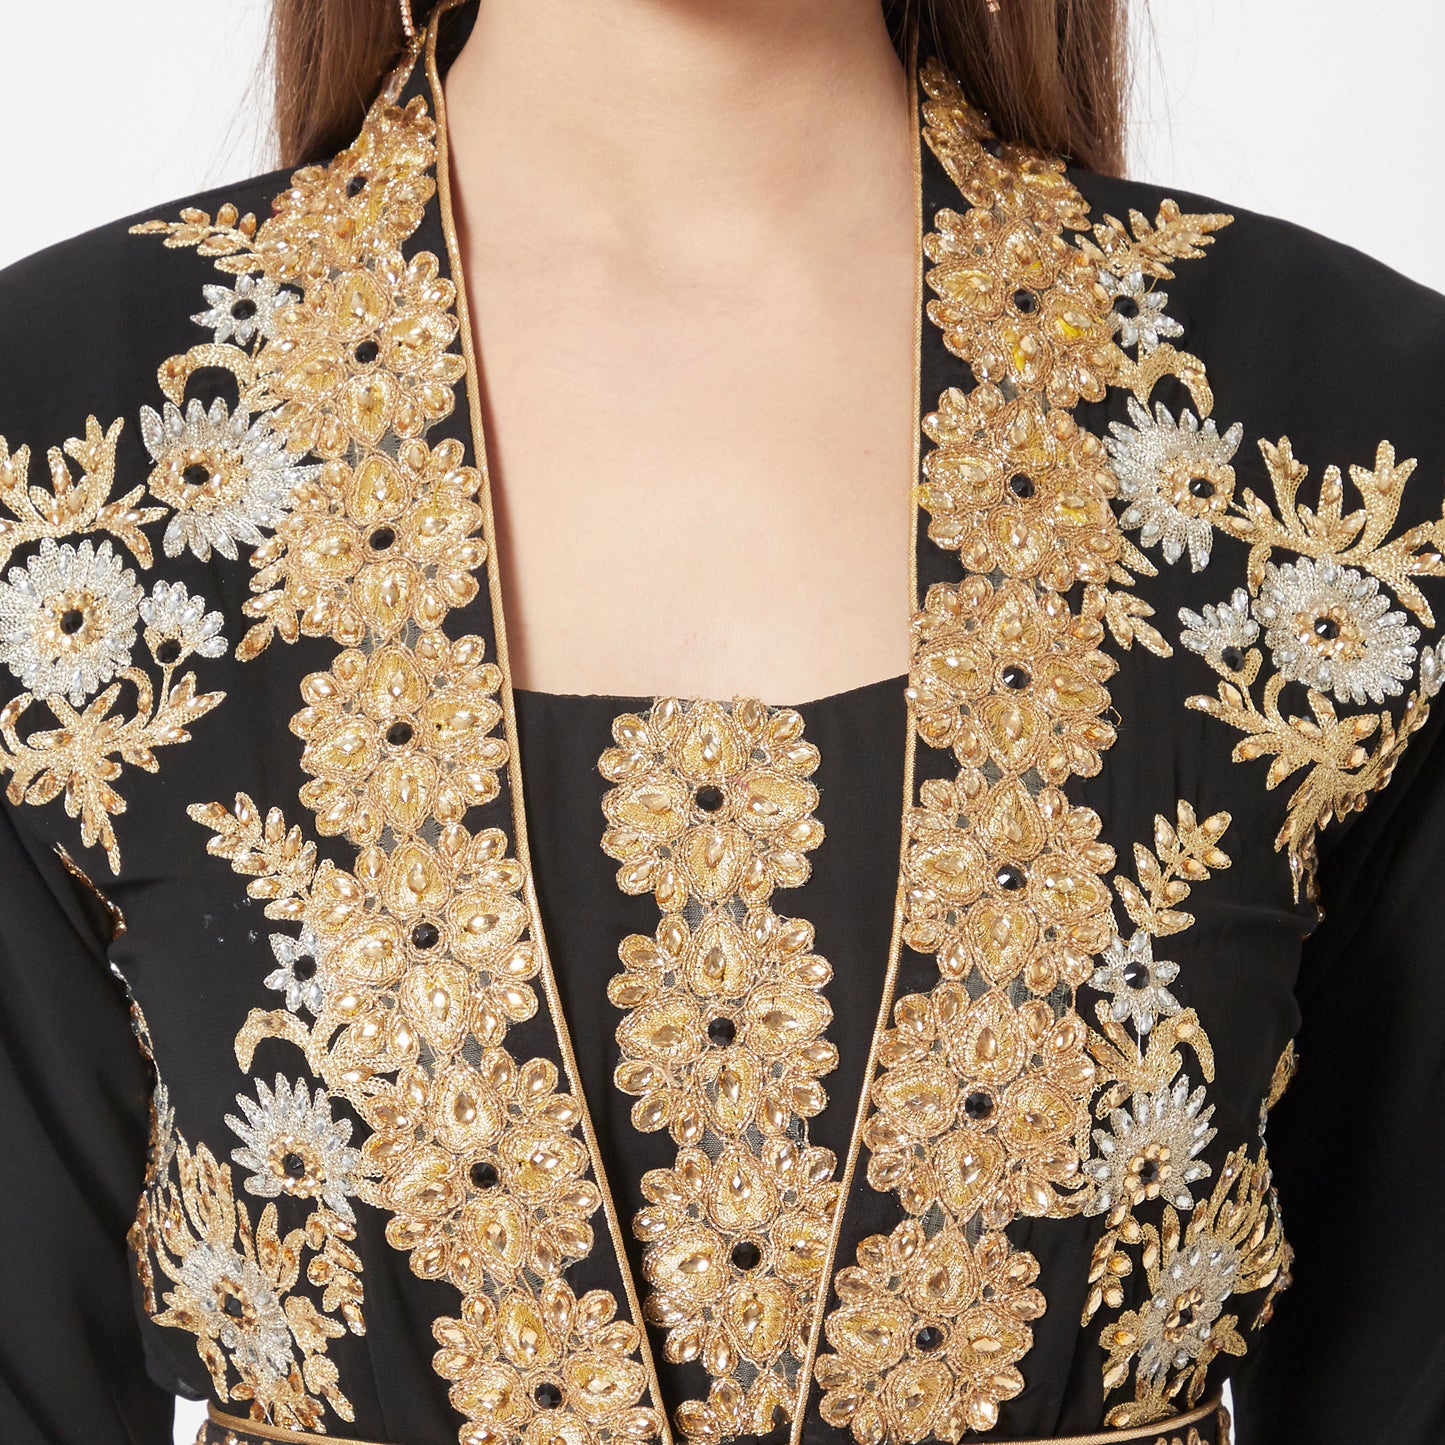 Black Wedding Gown Designer Maxi Dress with Threadwork Embroidery - Maxim Creation